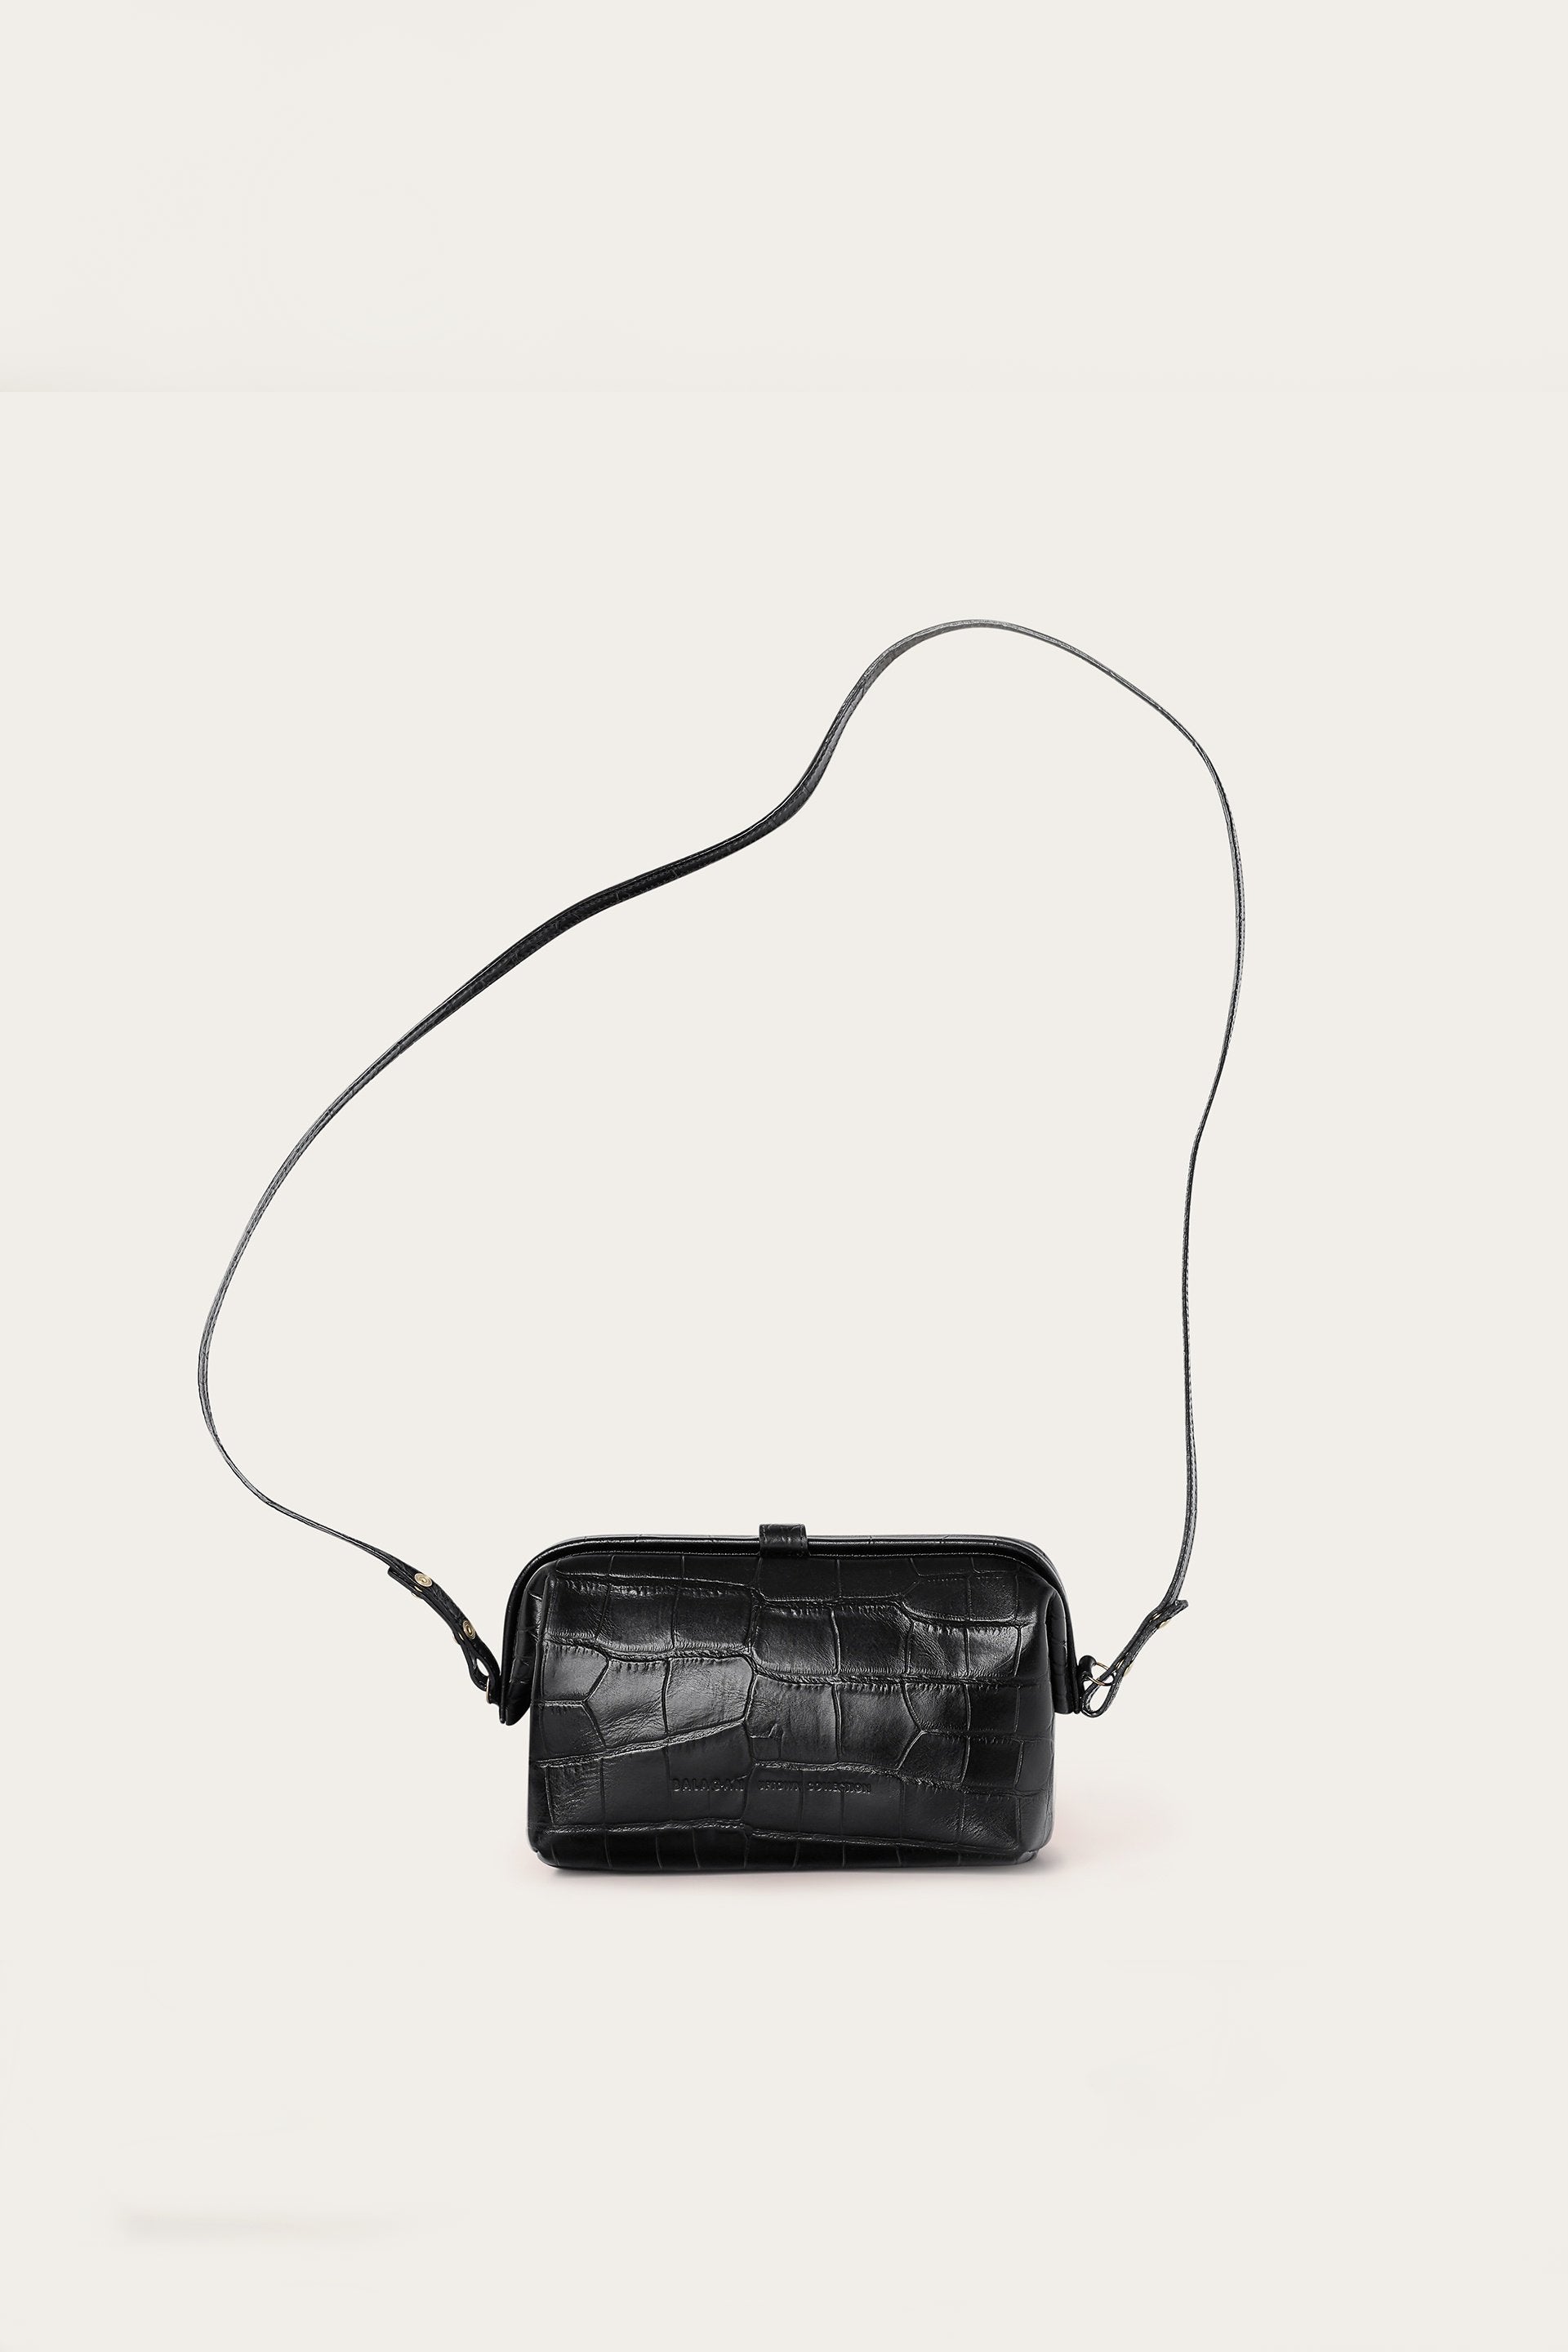 black croc clutch bag